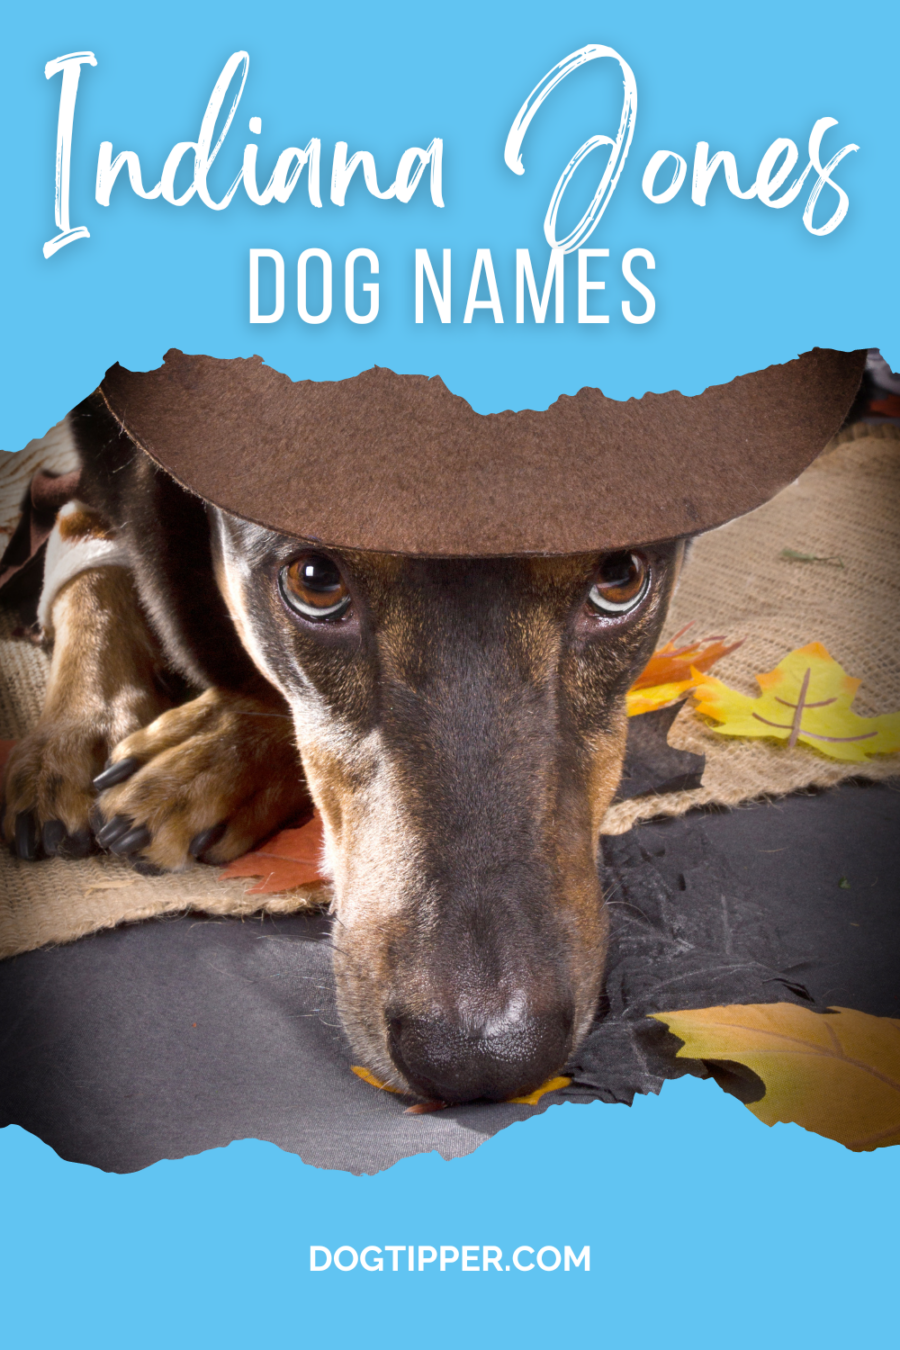 Indiana Jones Dog Names